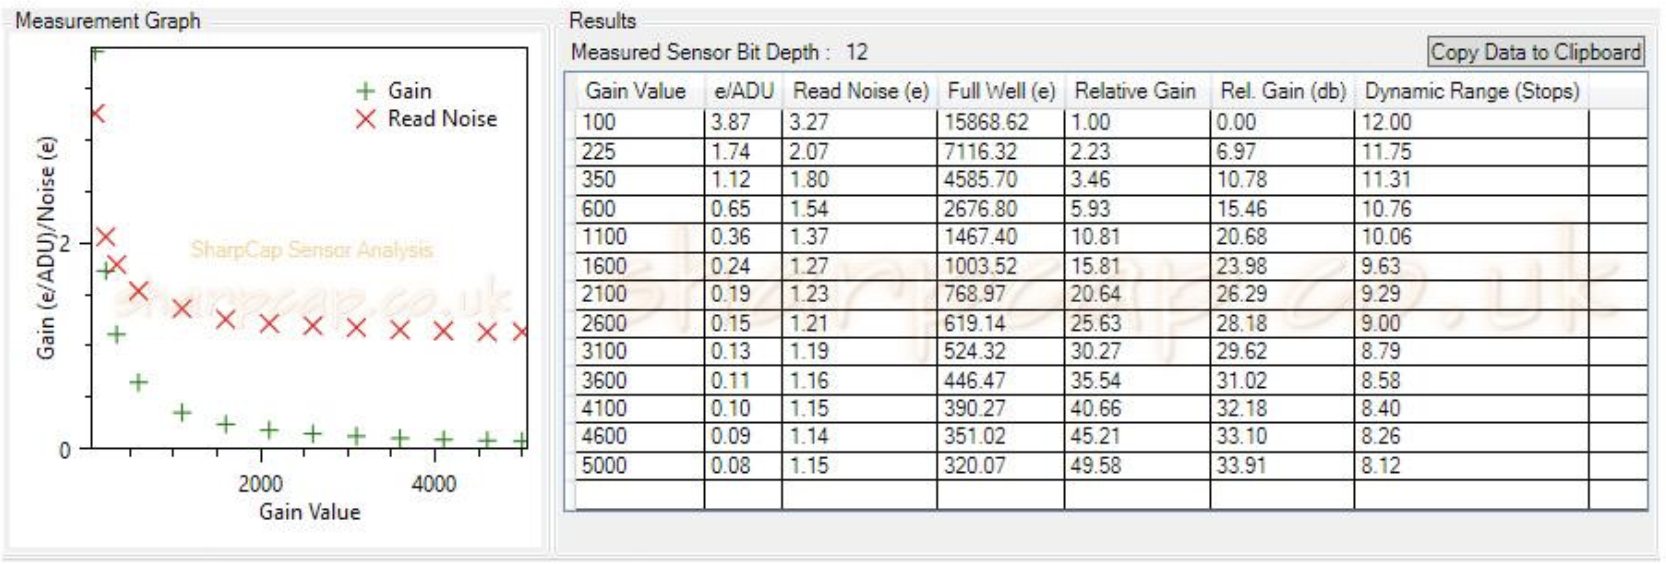 Sensor analysis shown on vendor website